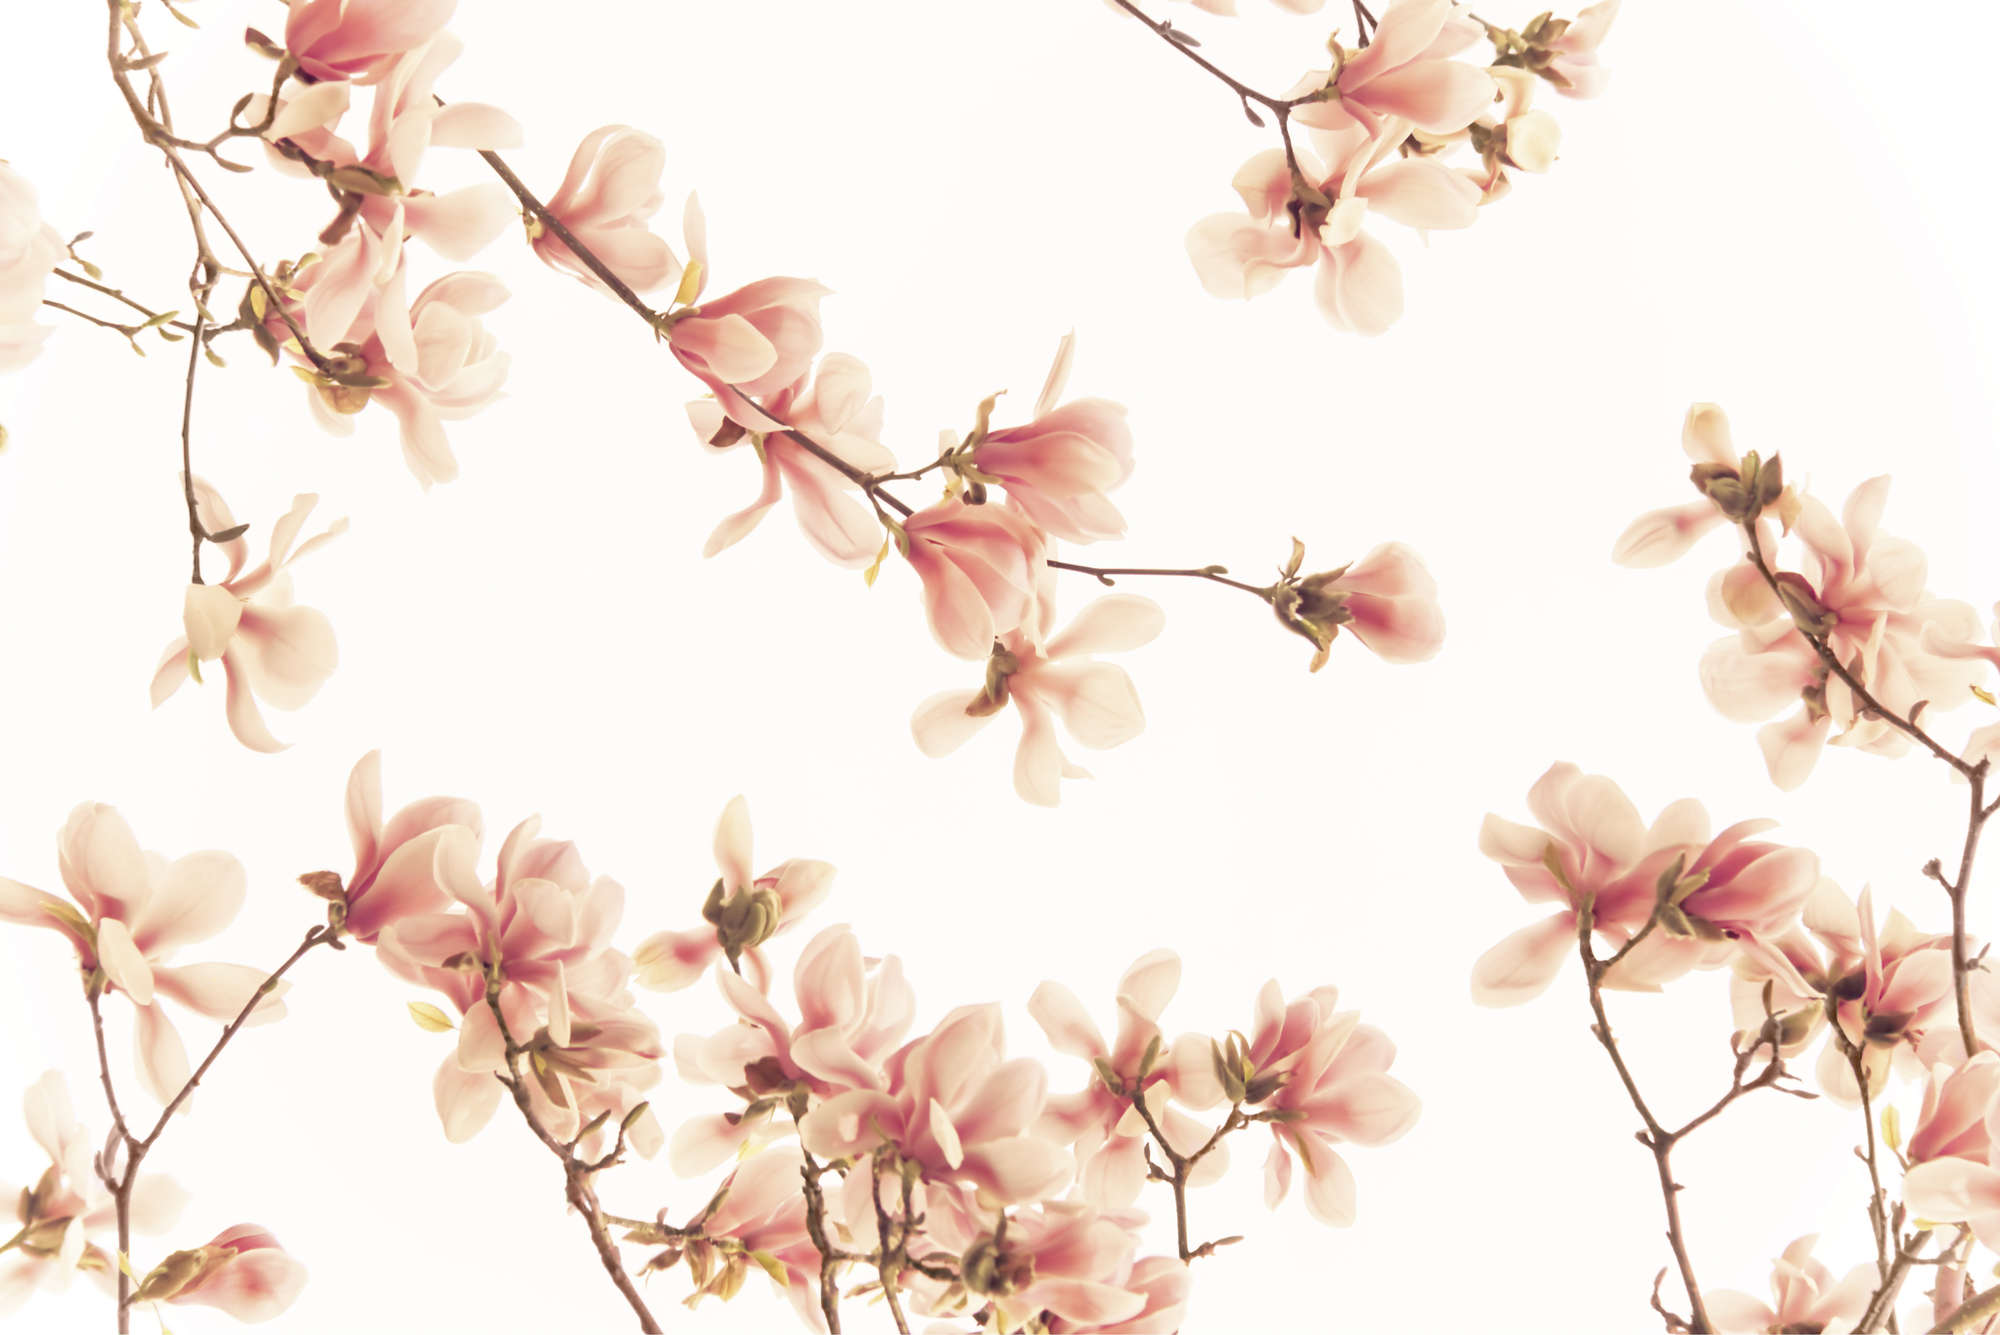             Fototapete Blüten in Rosa – Mattes Glattvlies
        